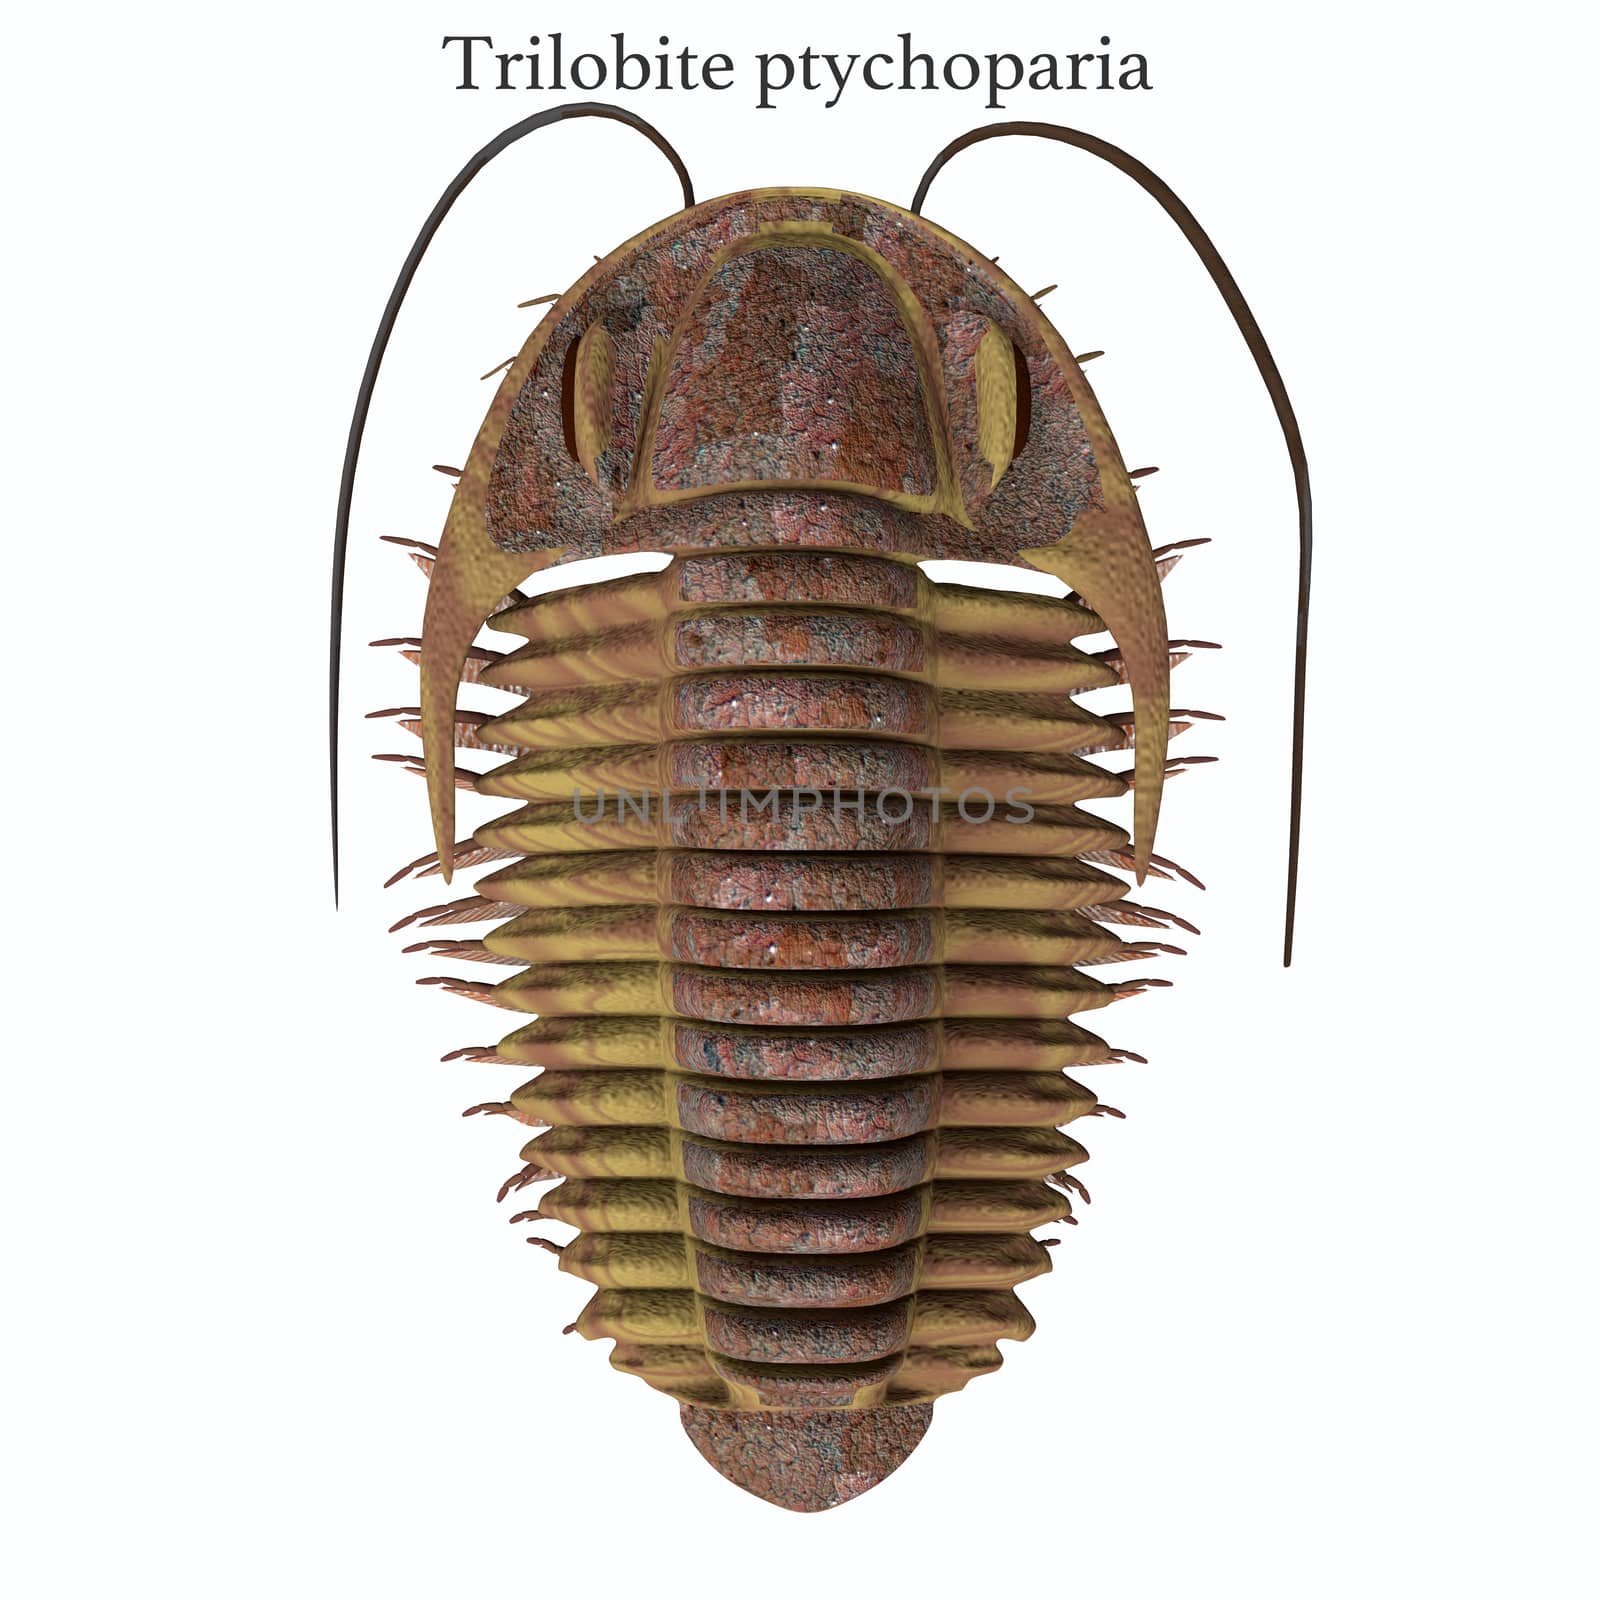 Trilobite ptychoparia and Font by Catmando